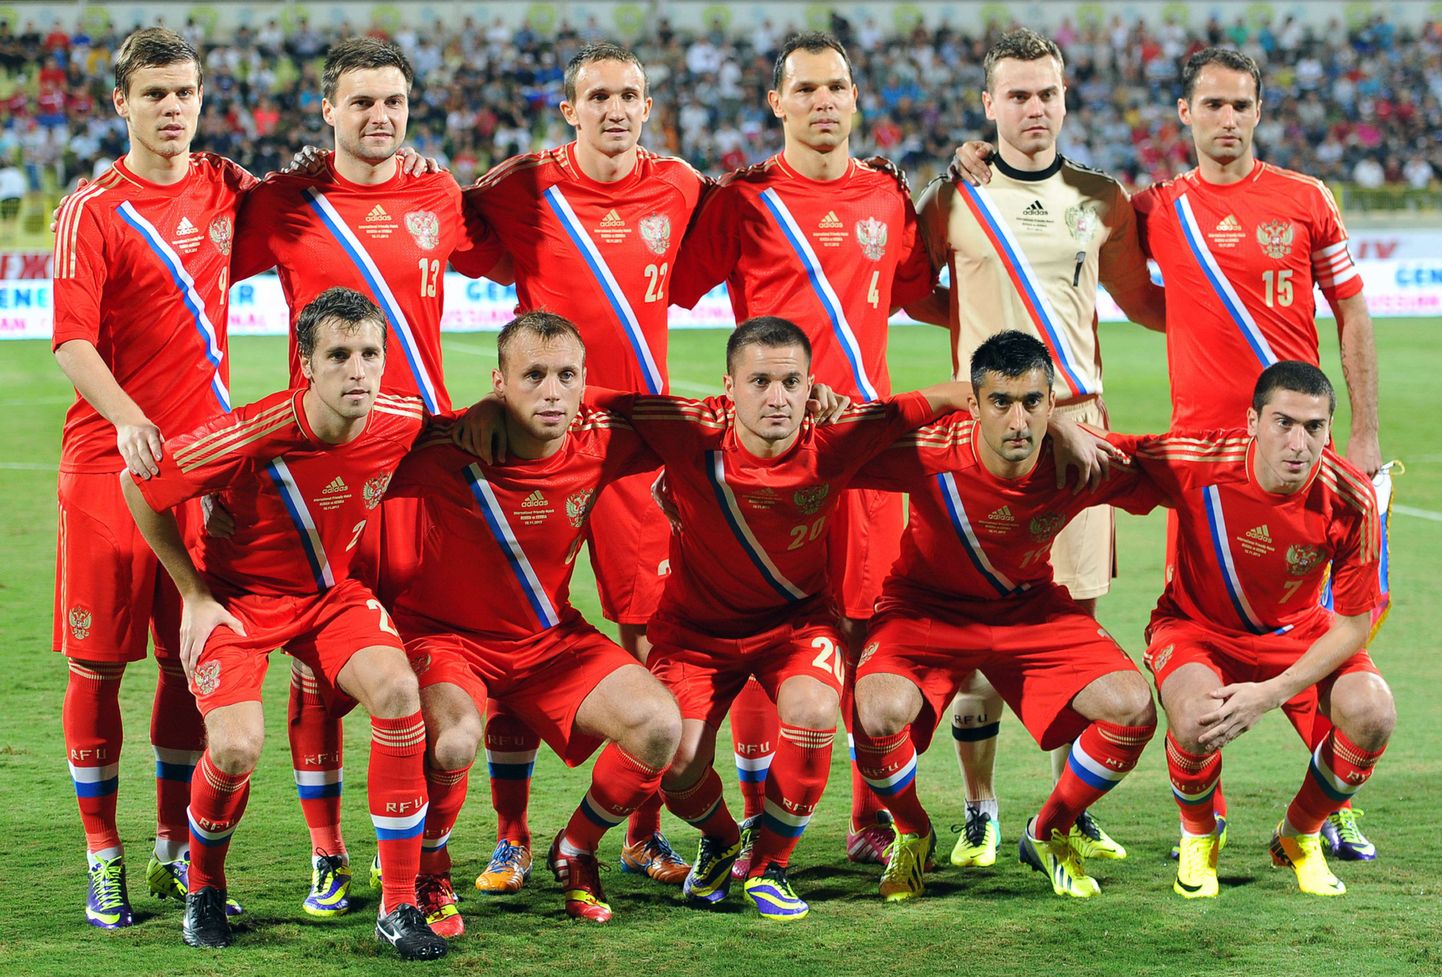 Venemaa jalgpallikoondis.